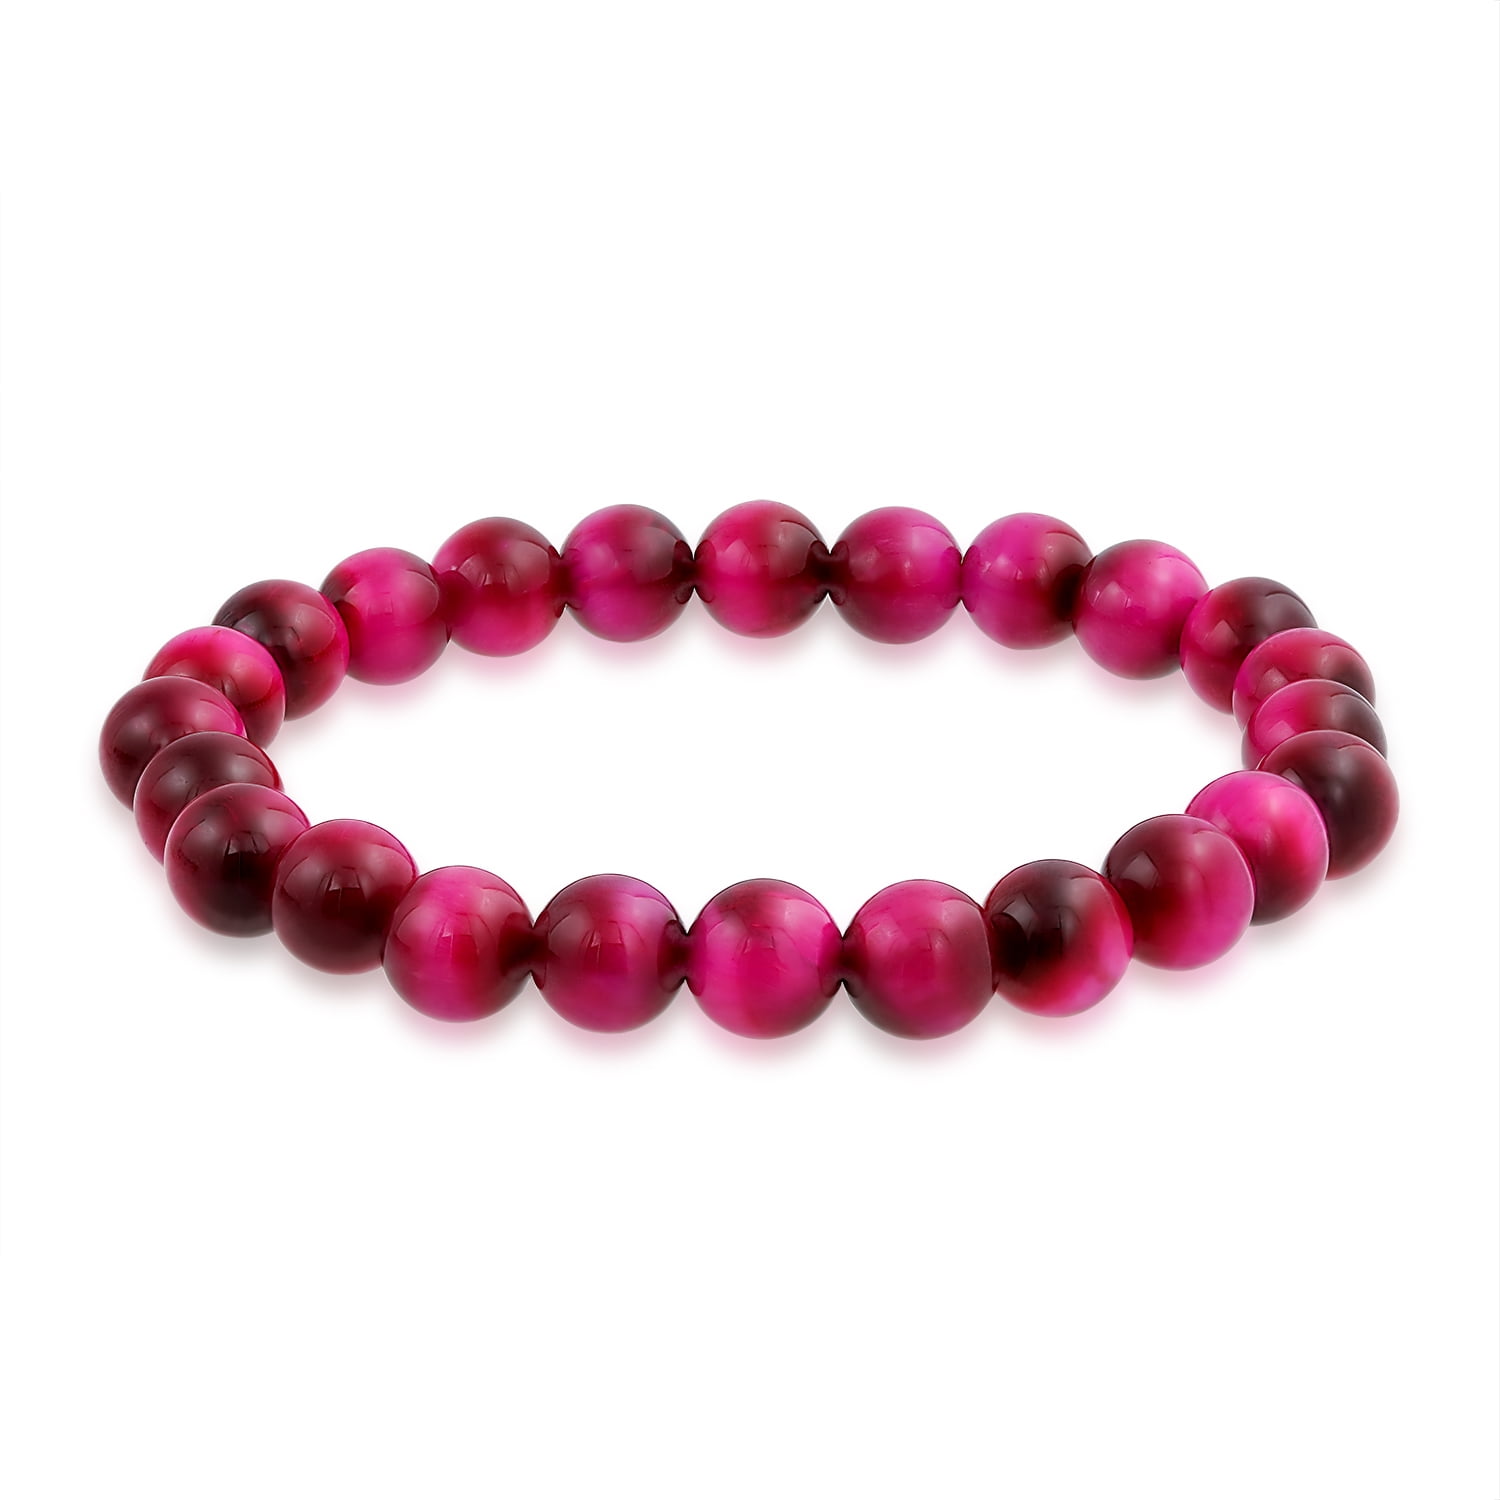 Woman’s Gift,Healing Protection Bracelet Tiger Eye 6mm beaded Gemstone bracelet Chakra love Collection Pink Rose heart spacer